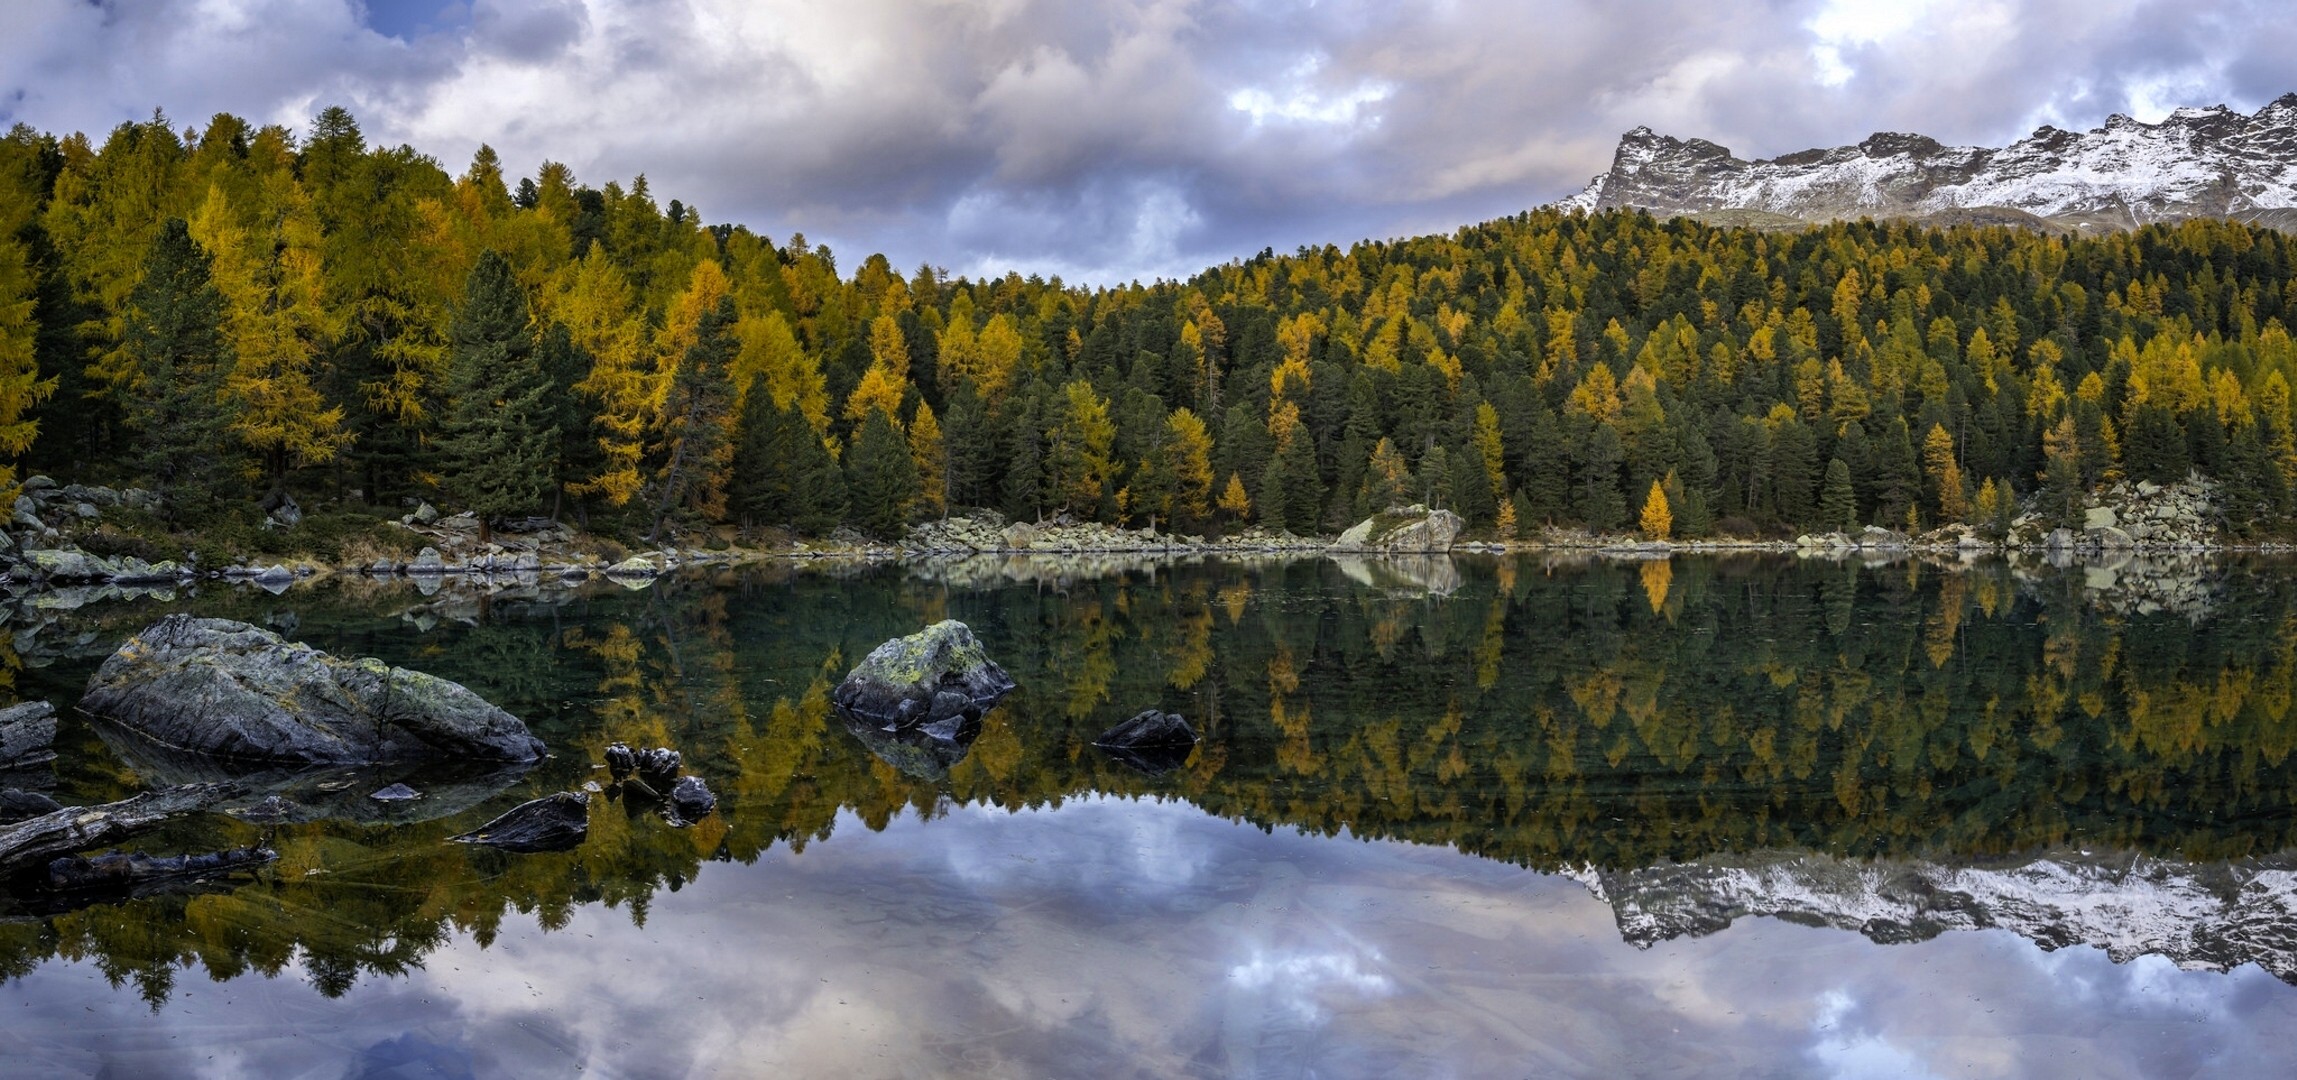 General 2297x1080 landscape lake pine trees Switzerland nature reflection mountains trees